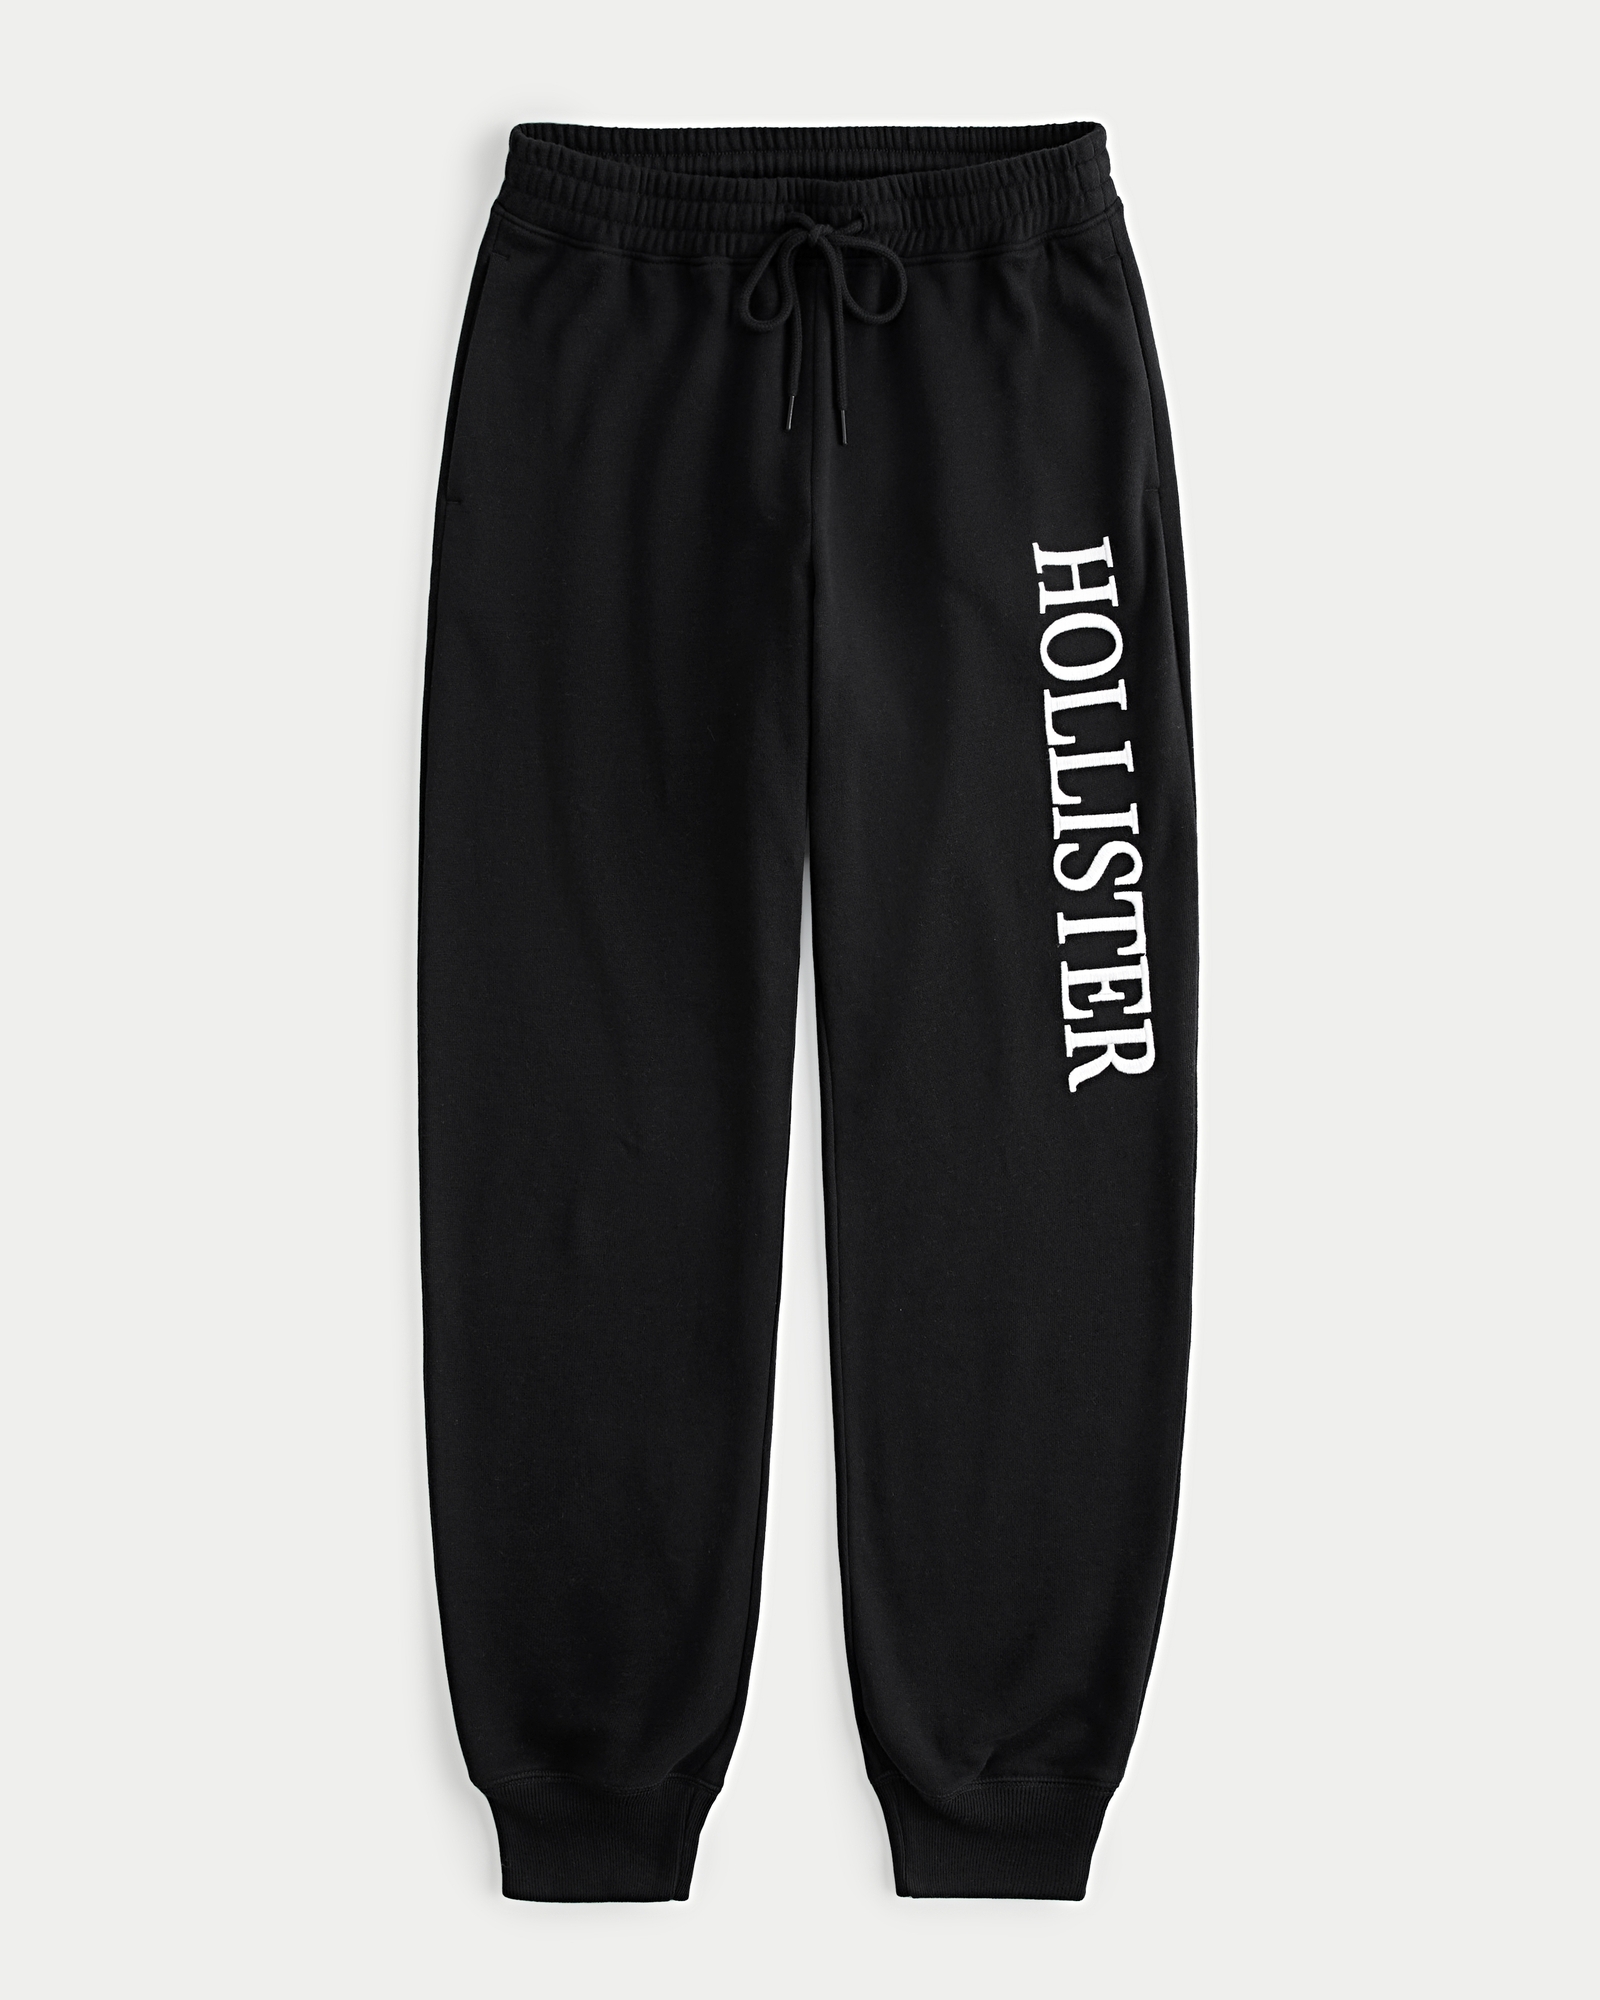 Hollister sweatpants in black Ultra high-rise No - Depop